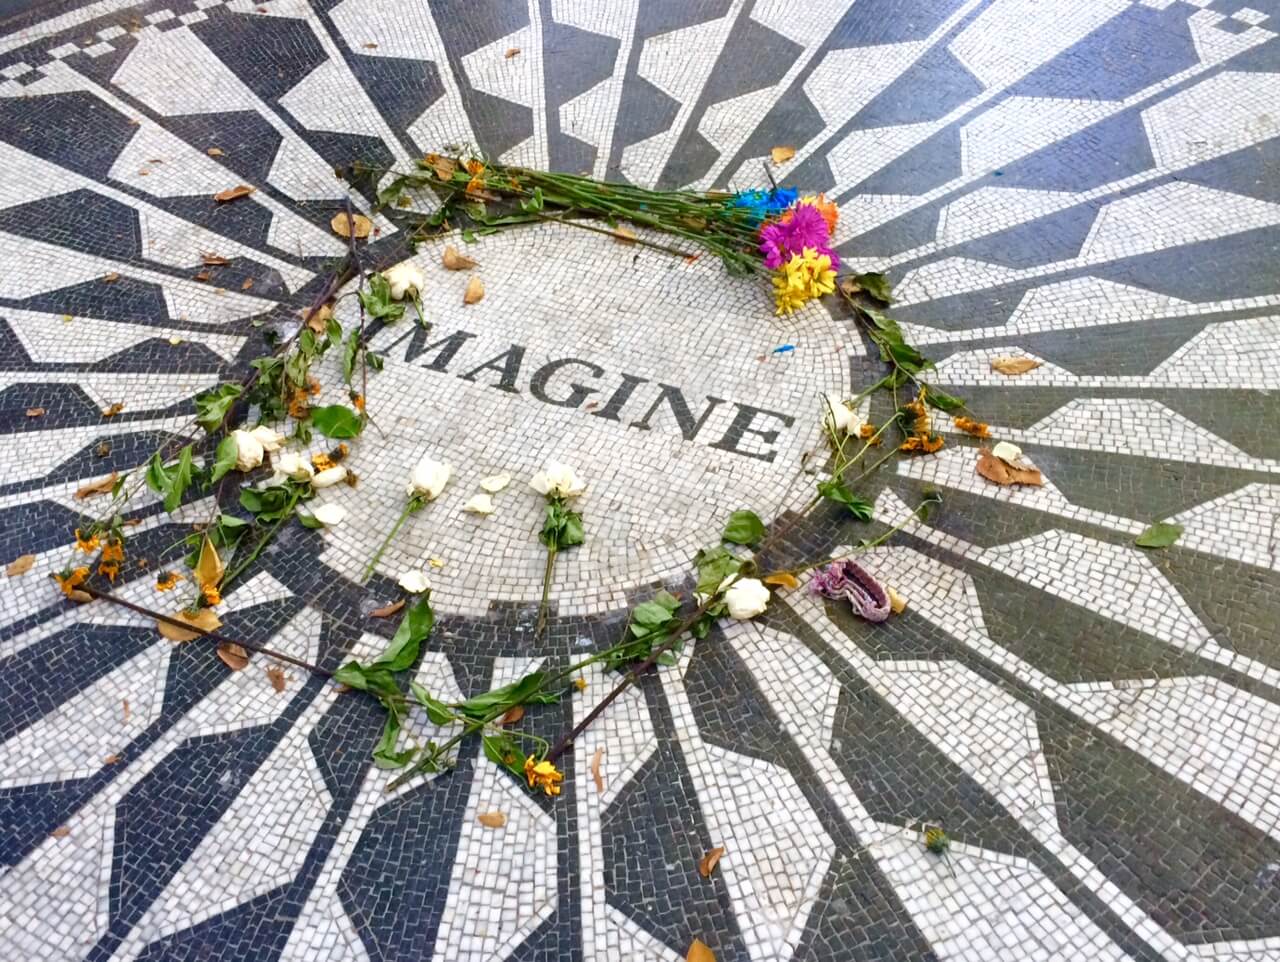 Homenaje a John Lennon en el Central Park